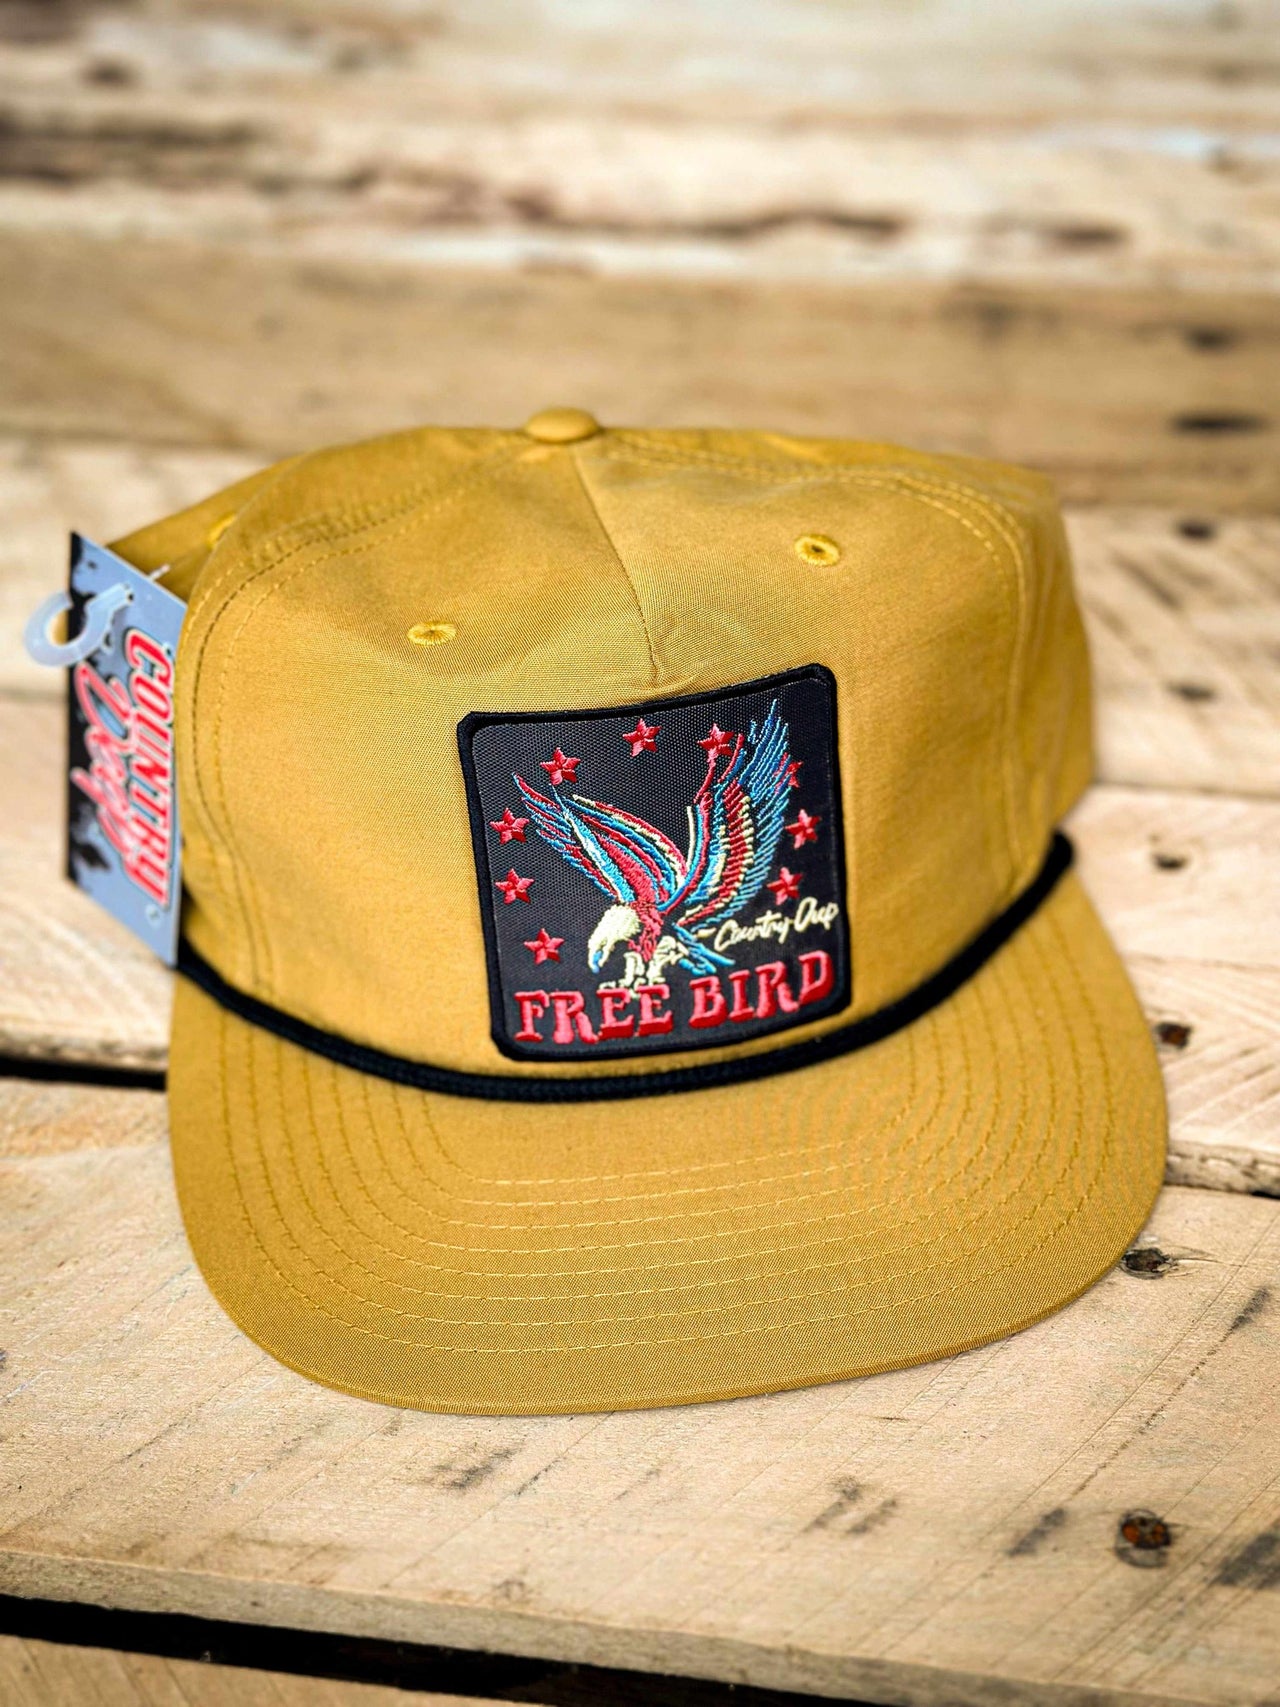 Free Bird Vintage 1970's Rope Hat